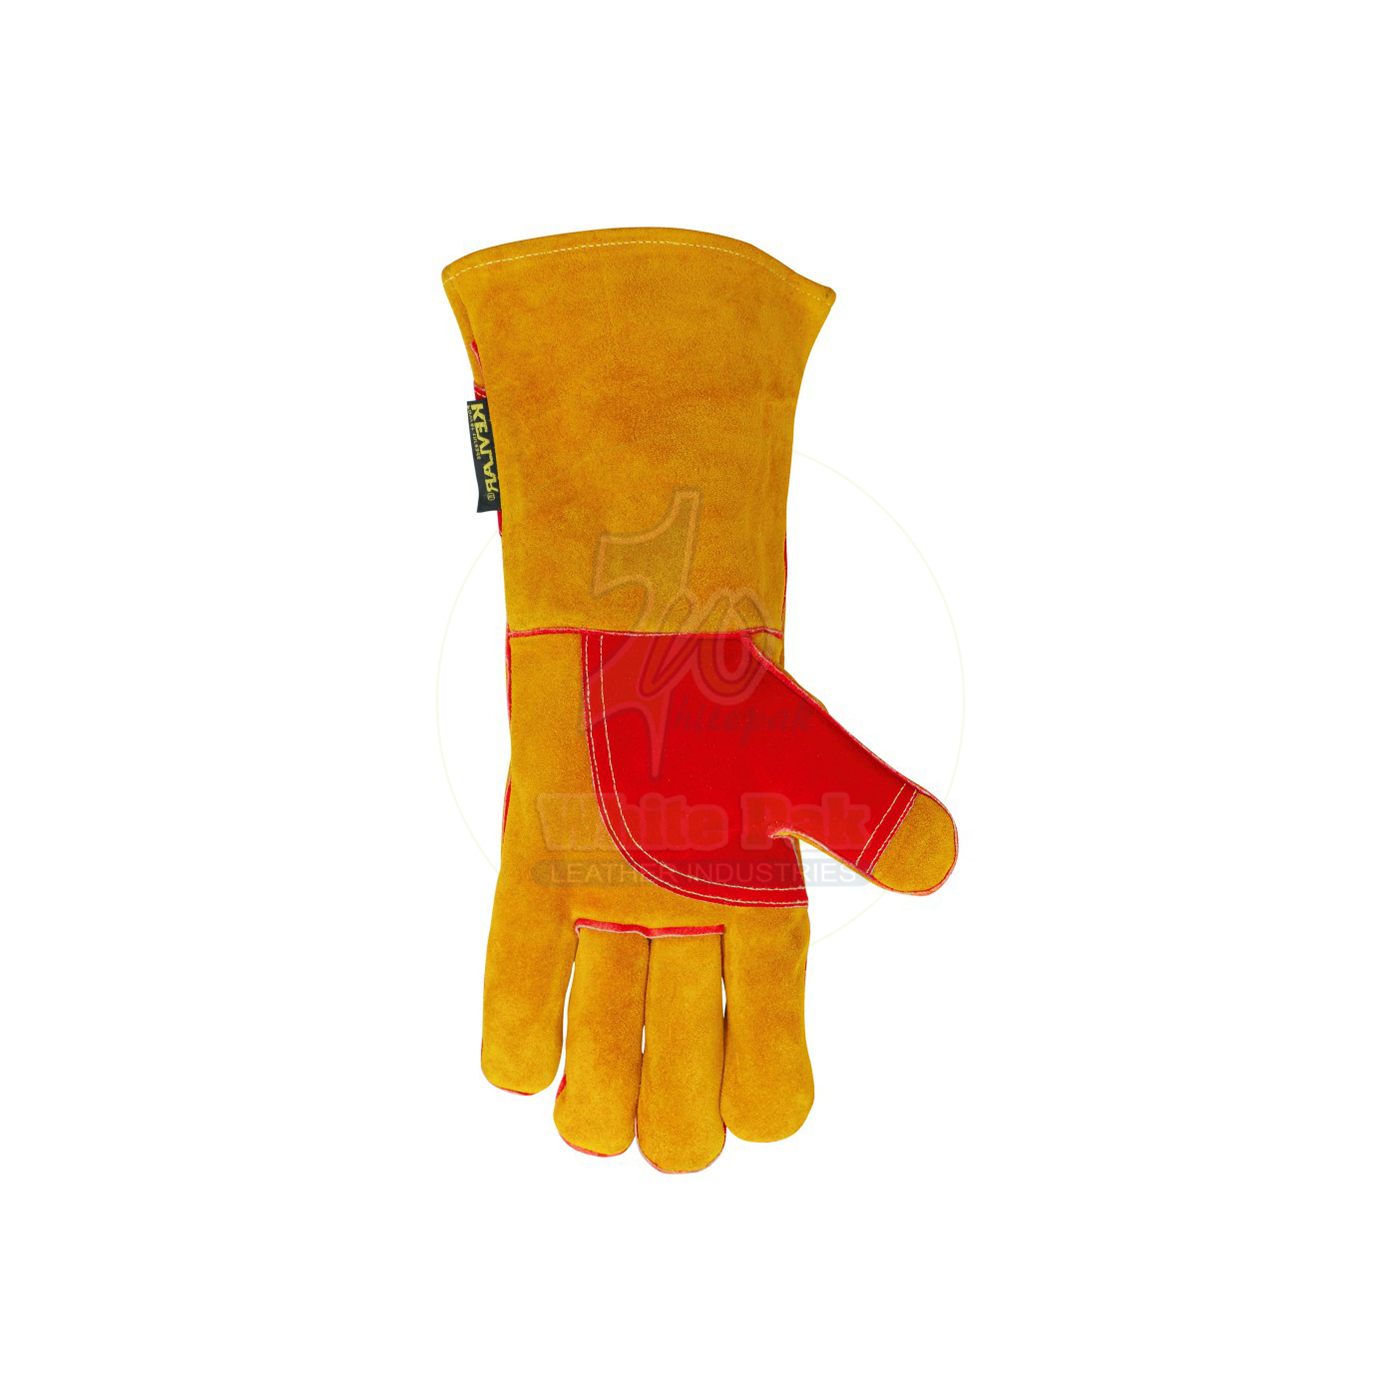 Reinforcement Palm Welding Gloves